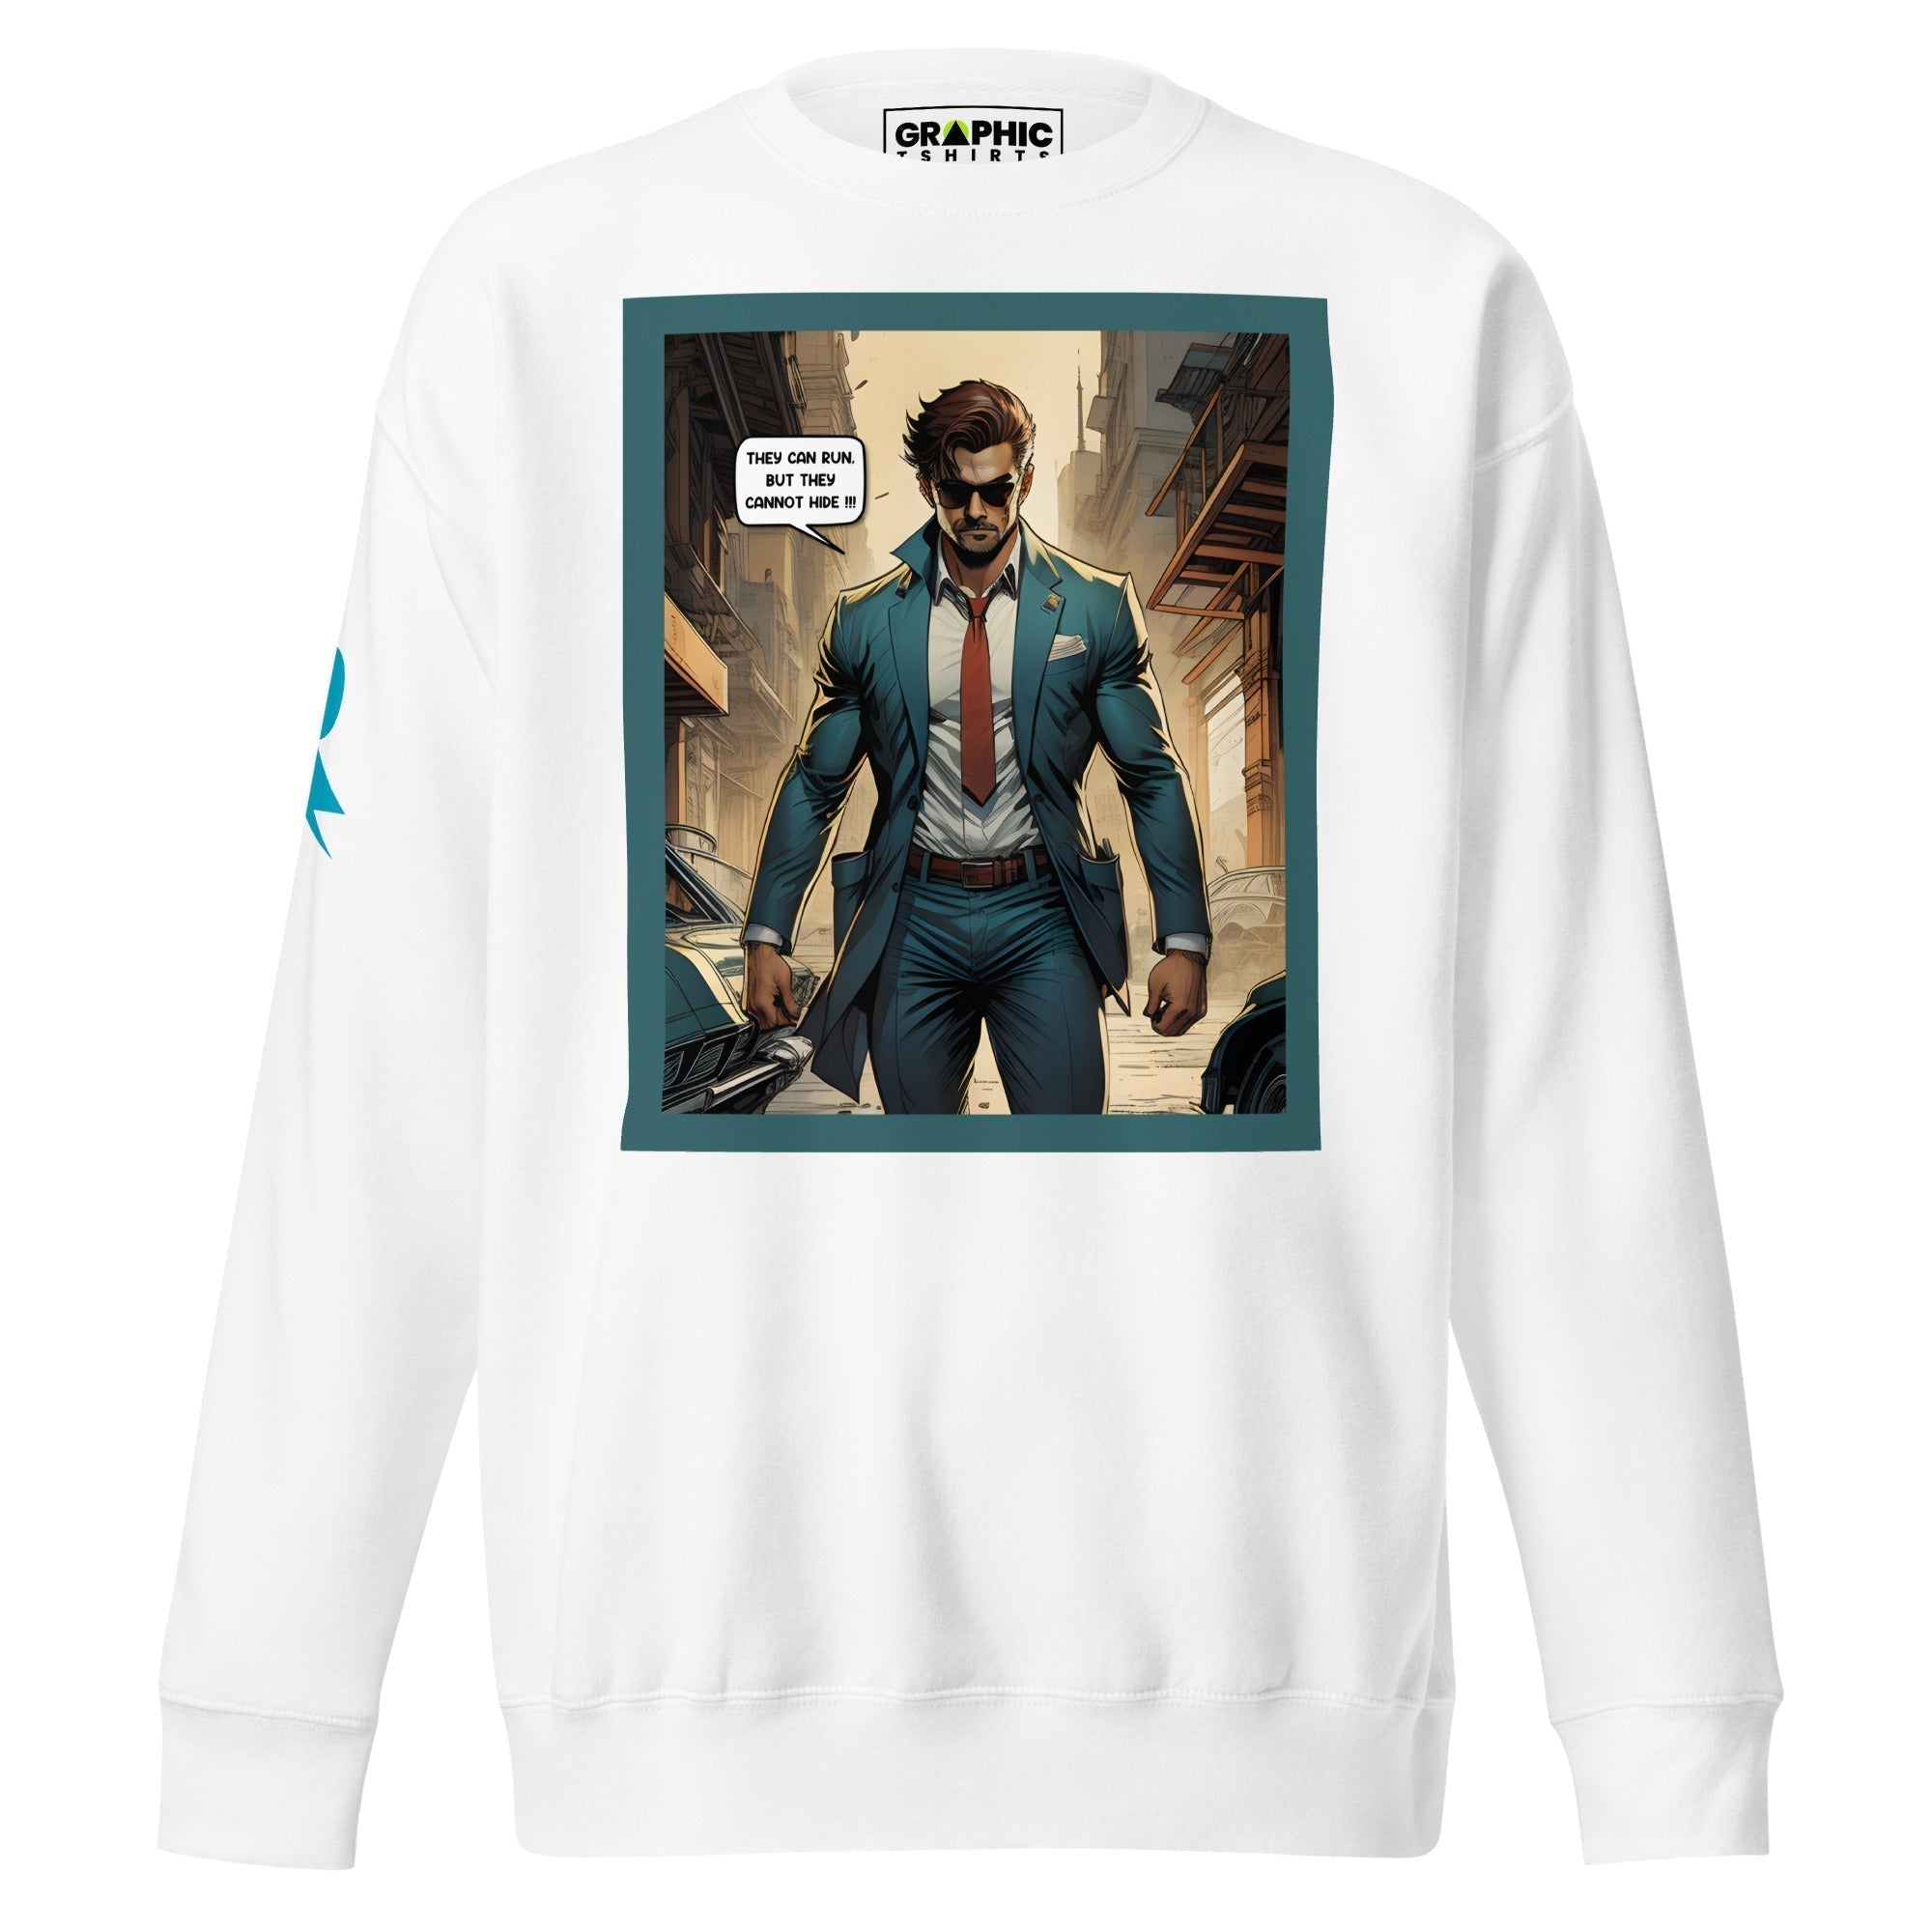 Unisex Premium Sweatshirt - Retribution: Heroes Unleashed v.23 - GRAPHIC T-SHIRTS